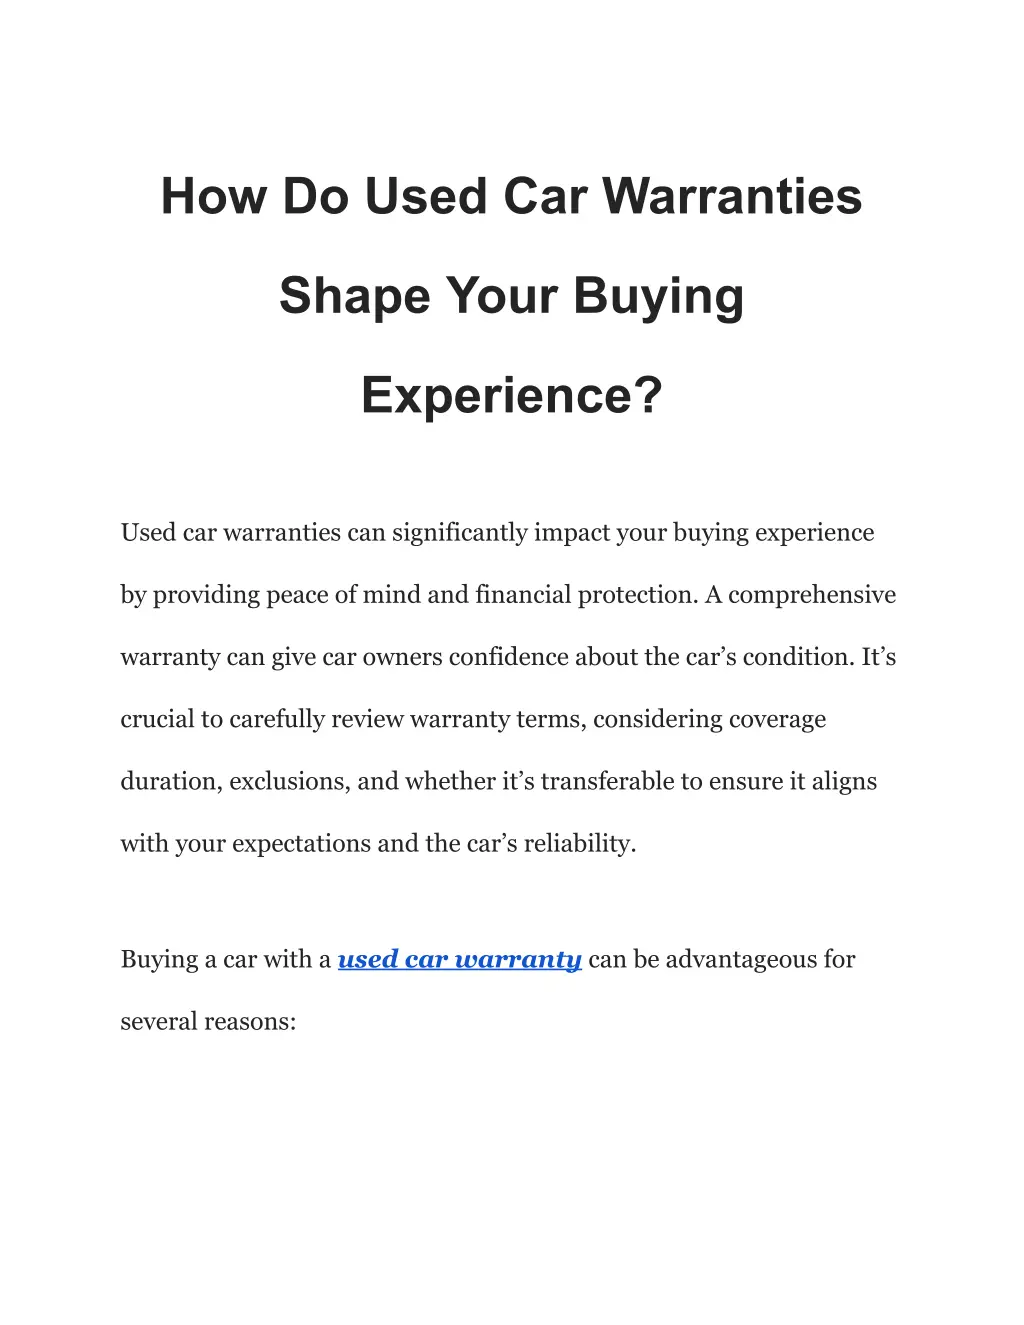 how do used car warranties